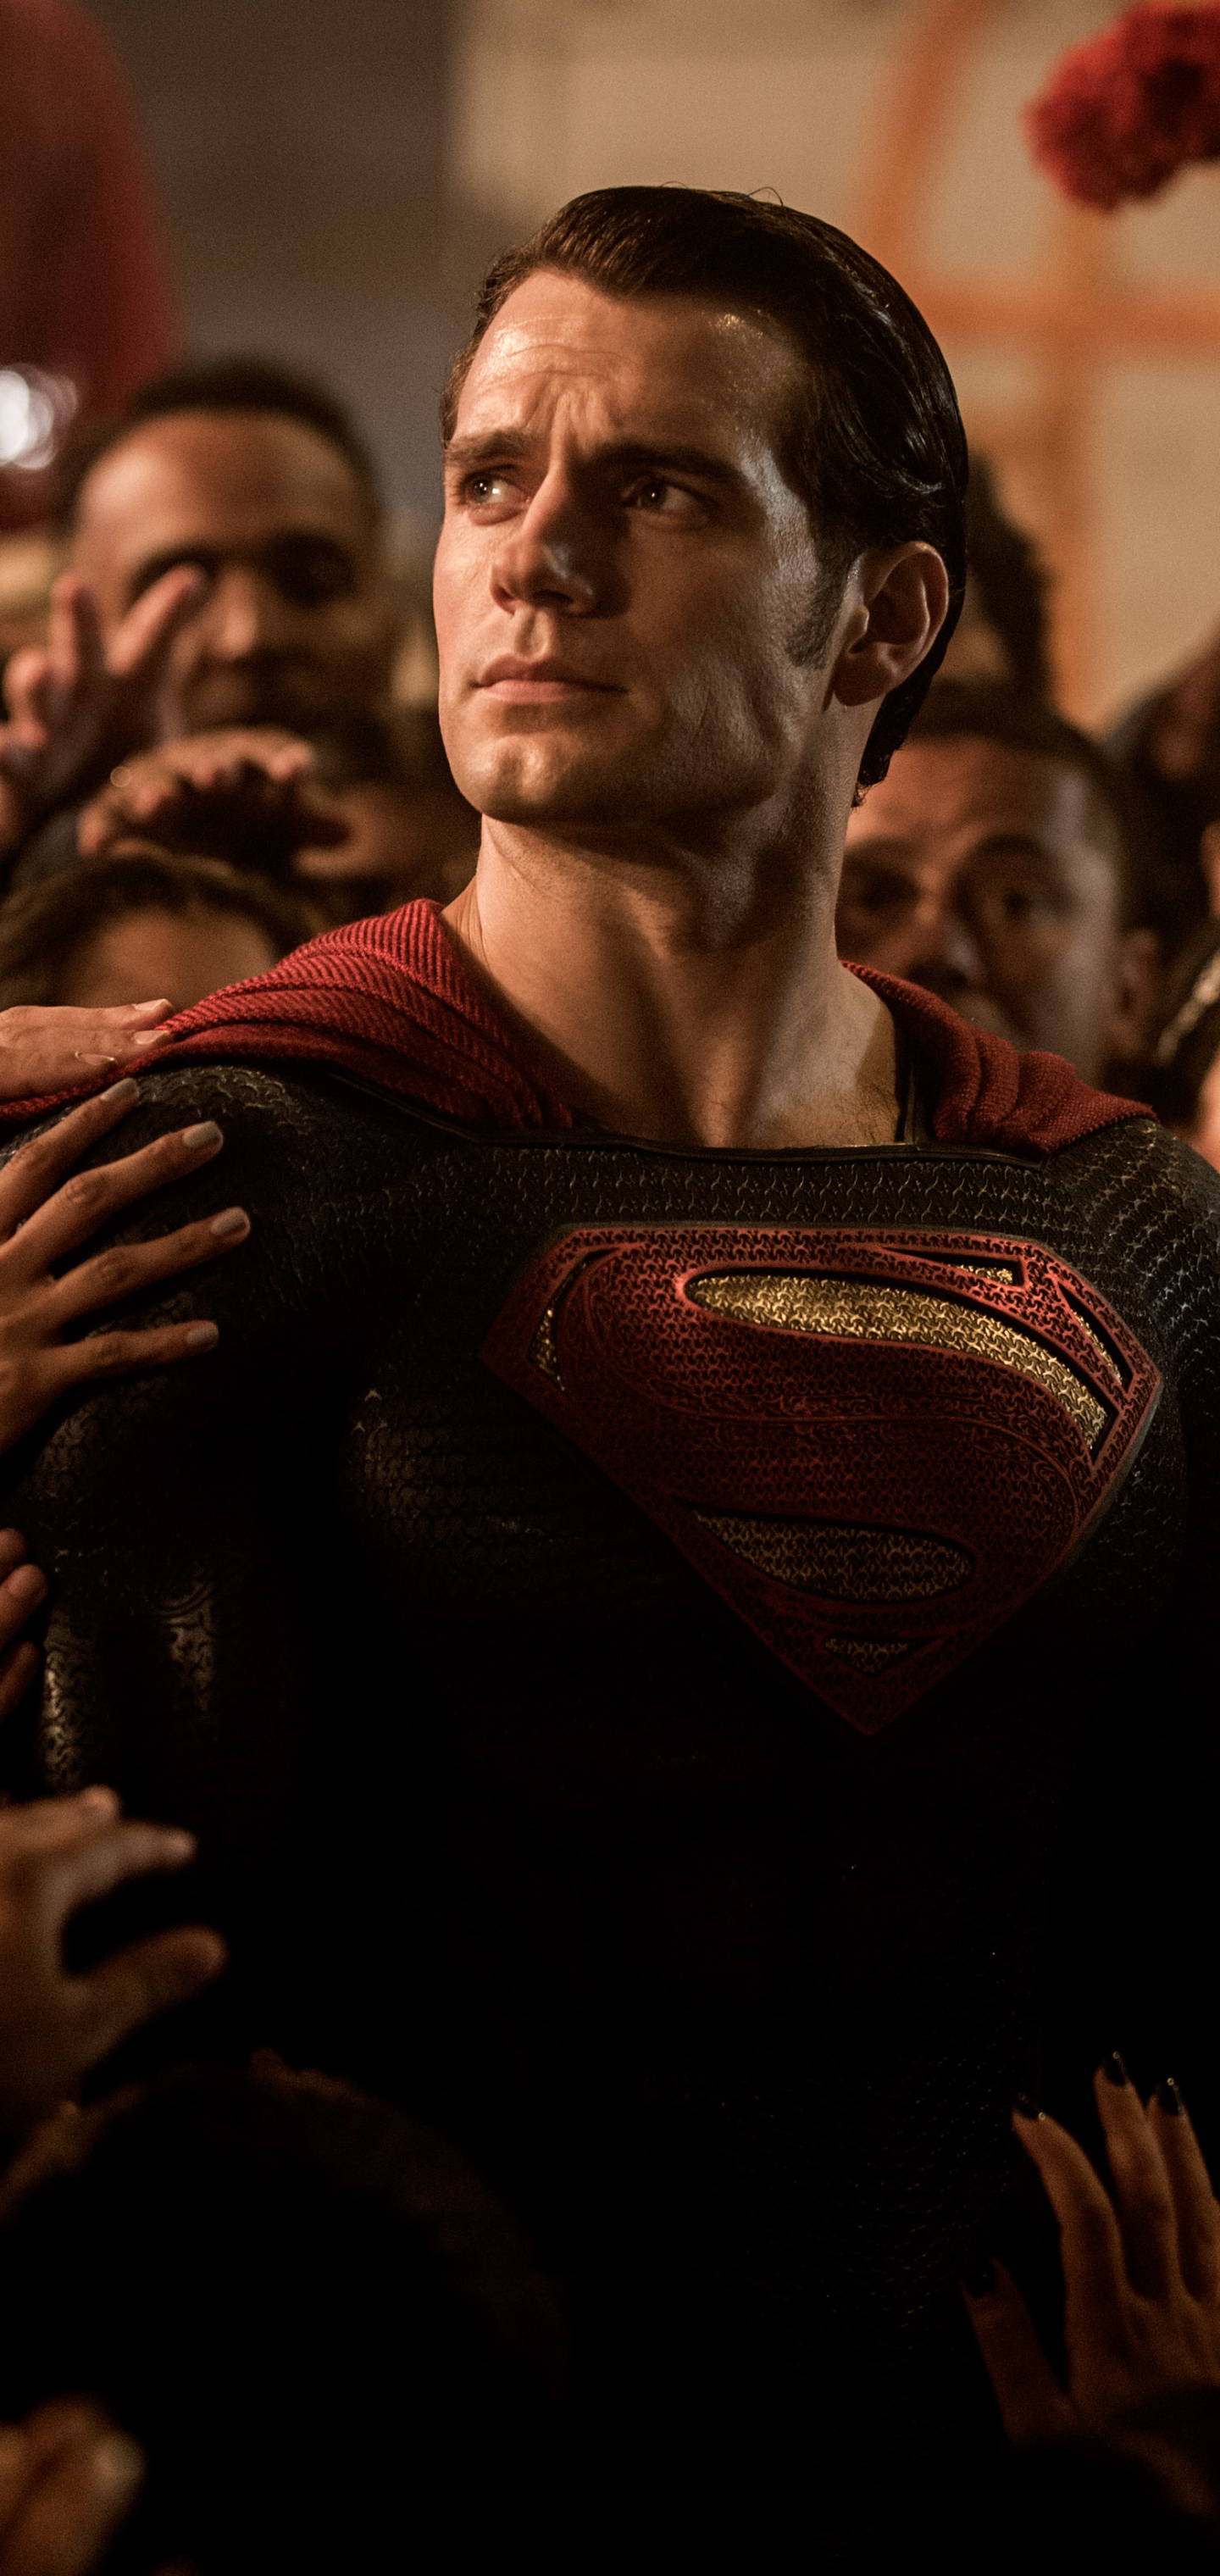 Скачать обои бесплатно Кино, Супермен, Генри Кавилл, Бэтмен Против Супермена: На Заре Справедливости картинка на рабочий стол ПК